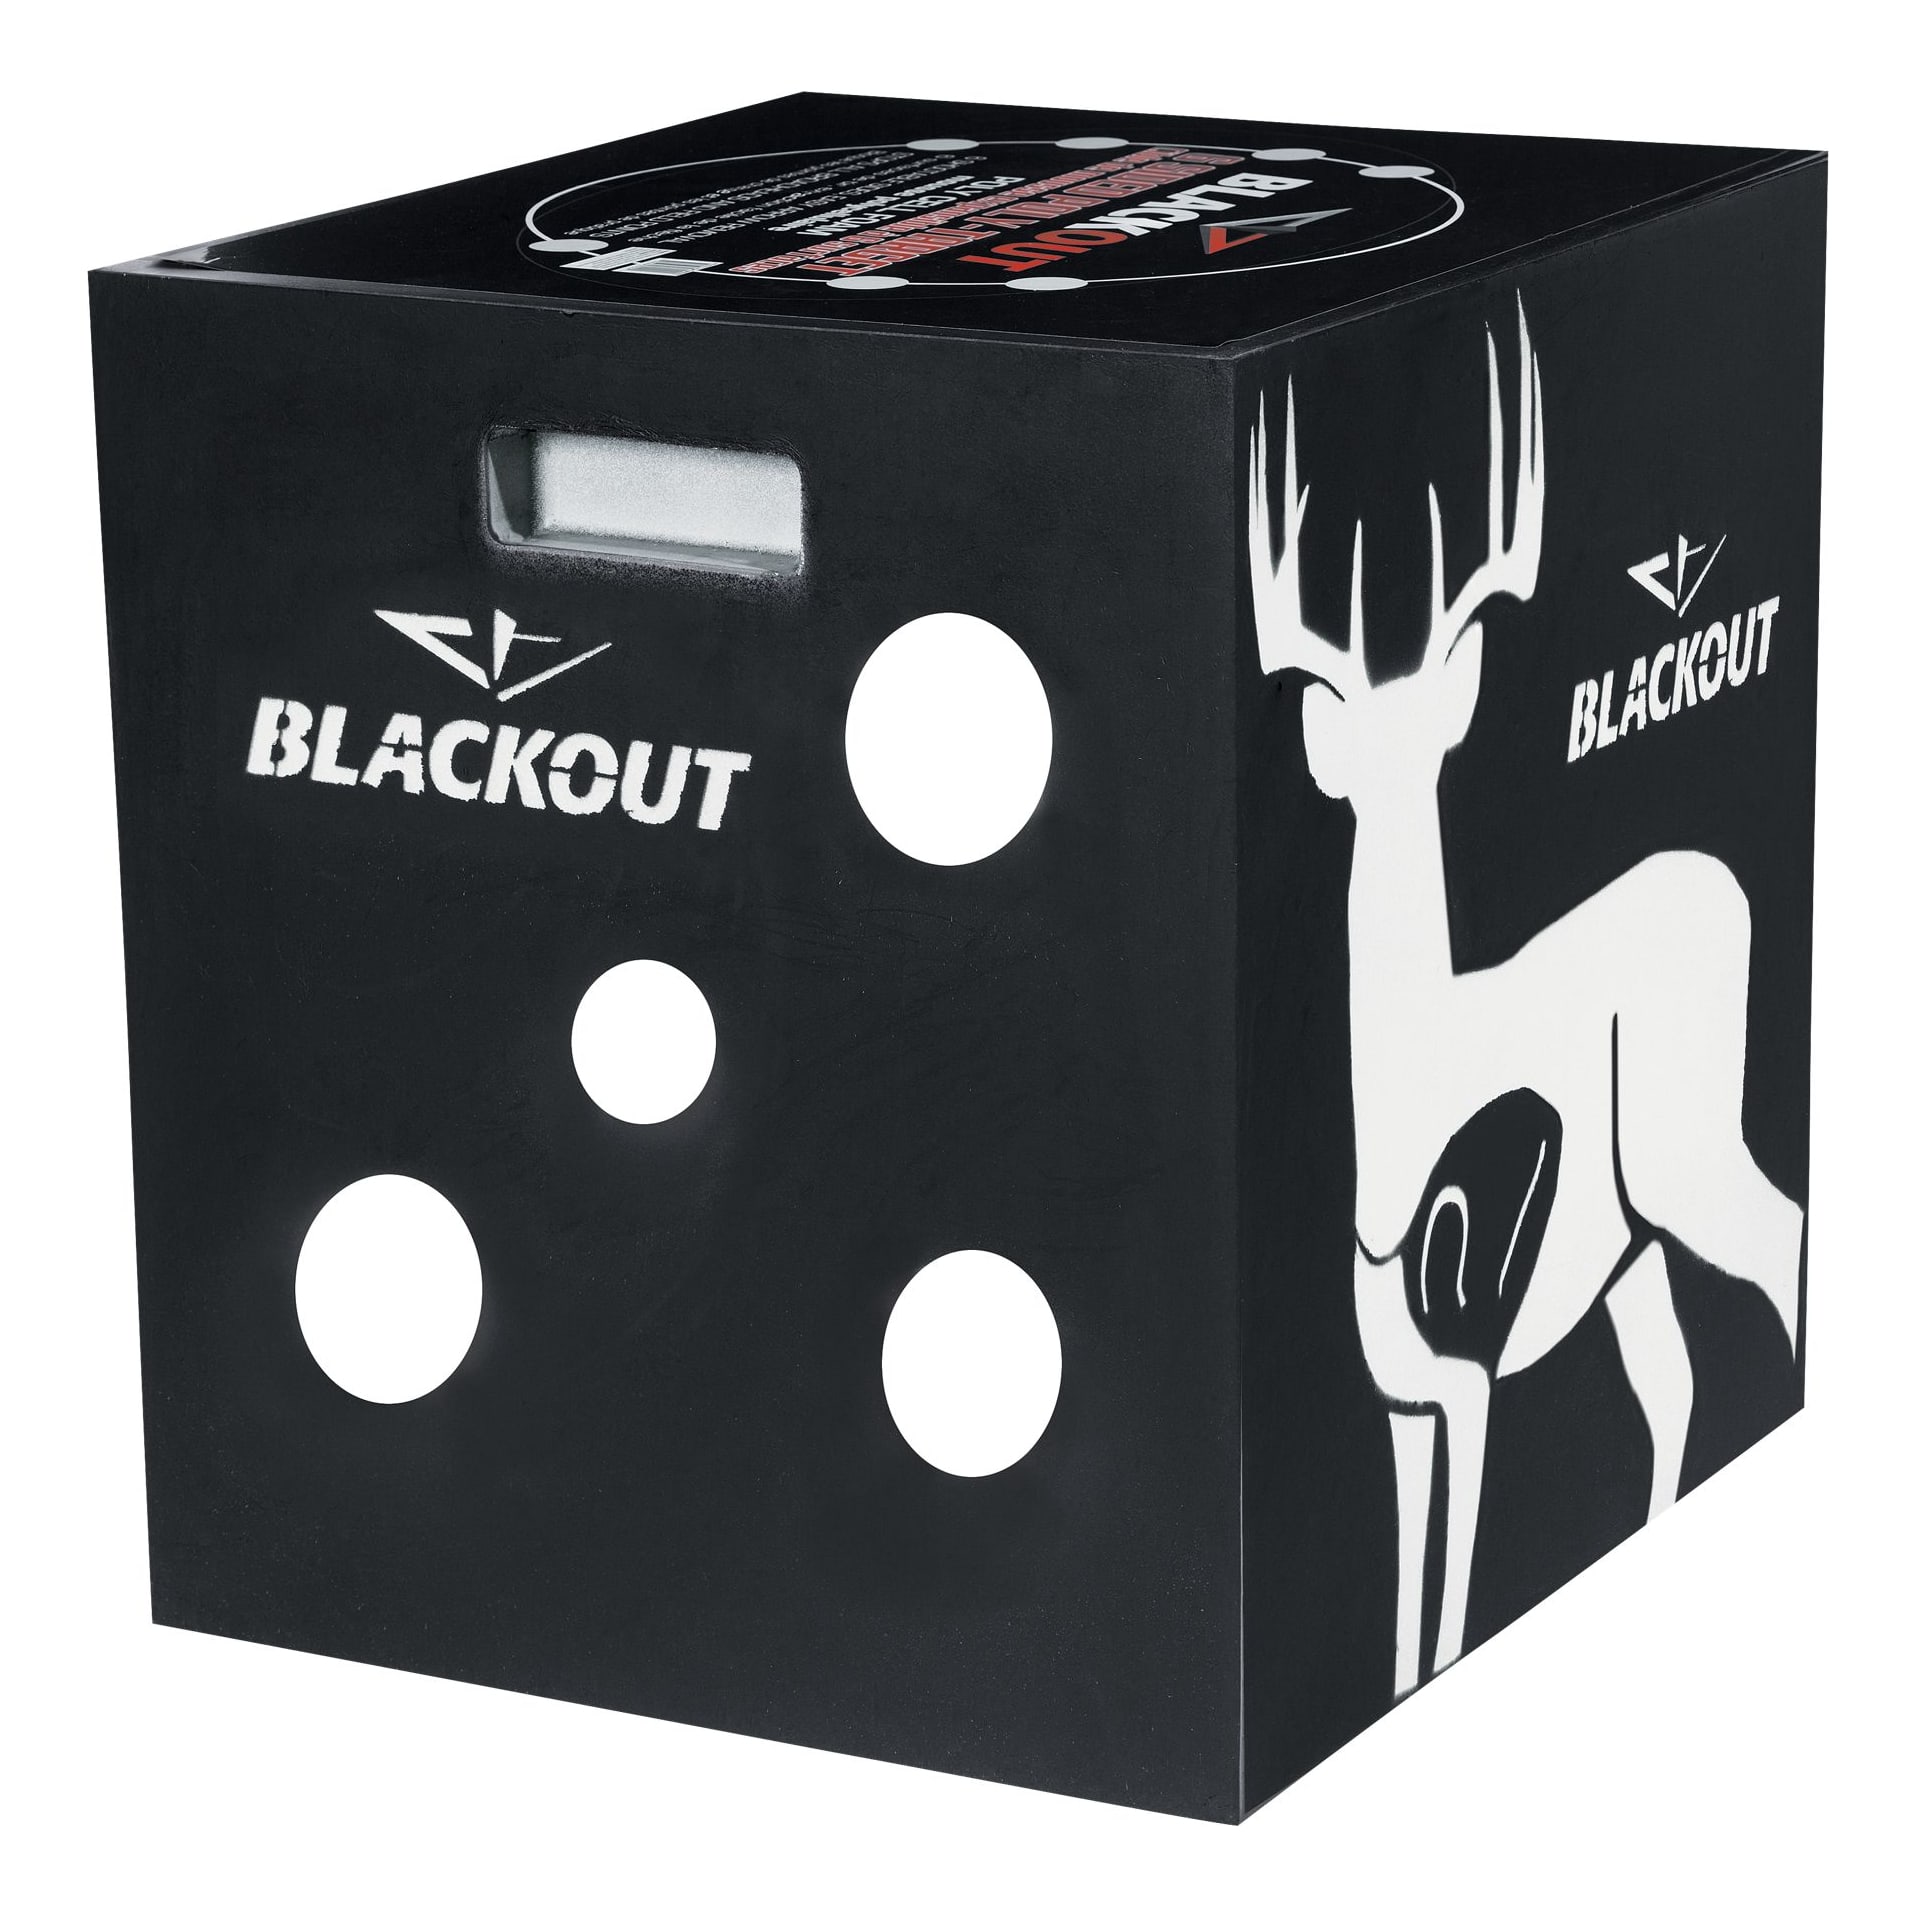 BlackOut 6-Sided Foam Archery Target - Factory Second